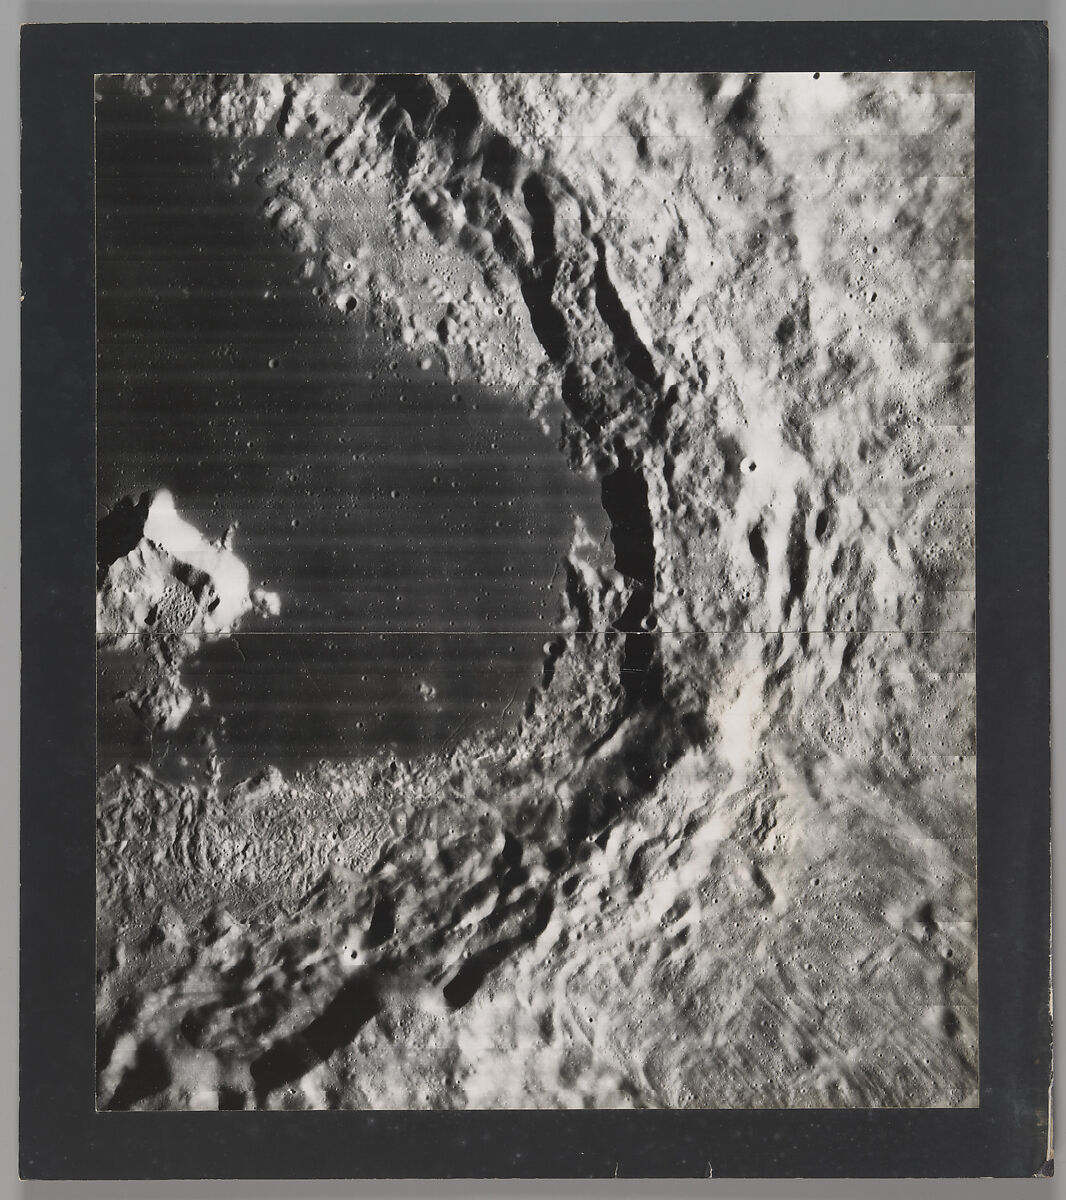 Far Side of the Moon at Apolune, National Aeronautics and Space Administration (NASA), Gelatin silver prints 